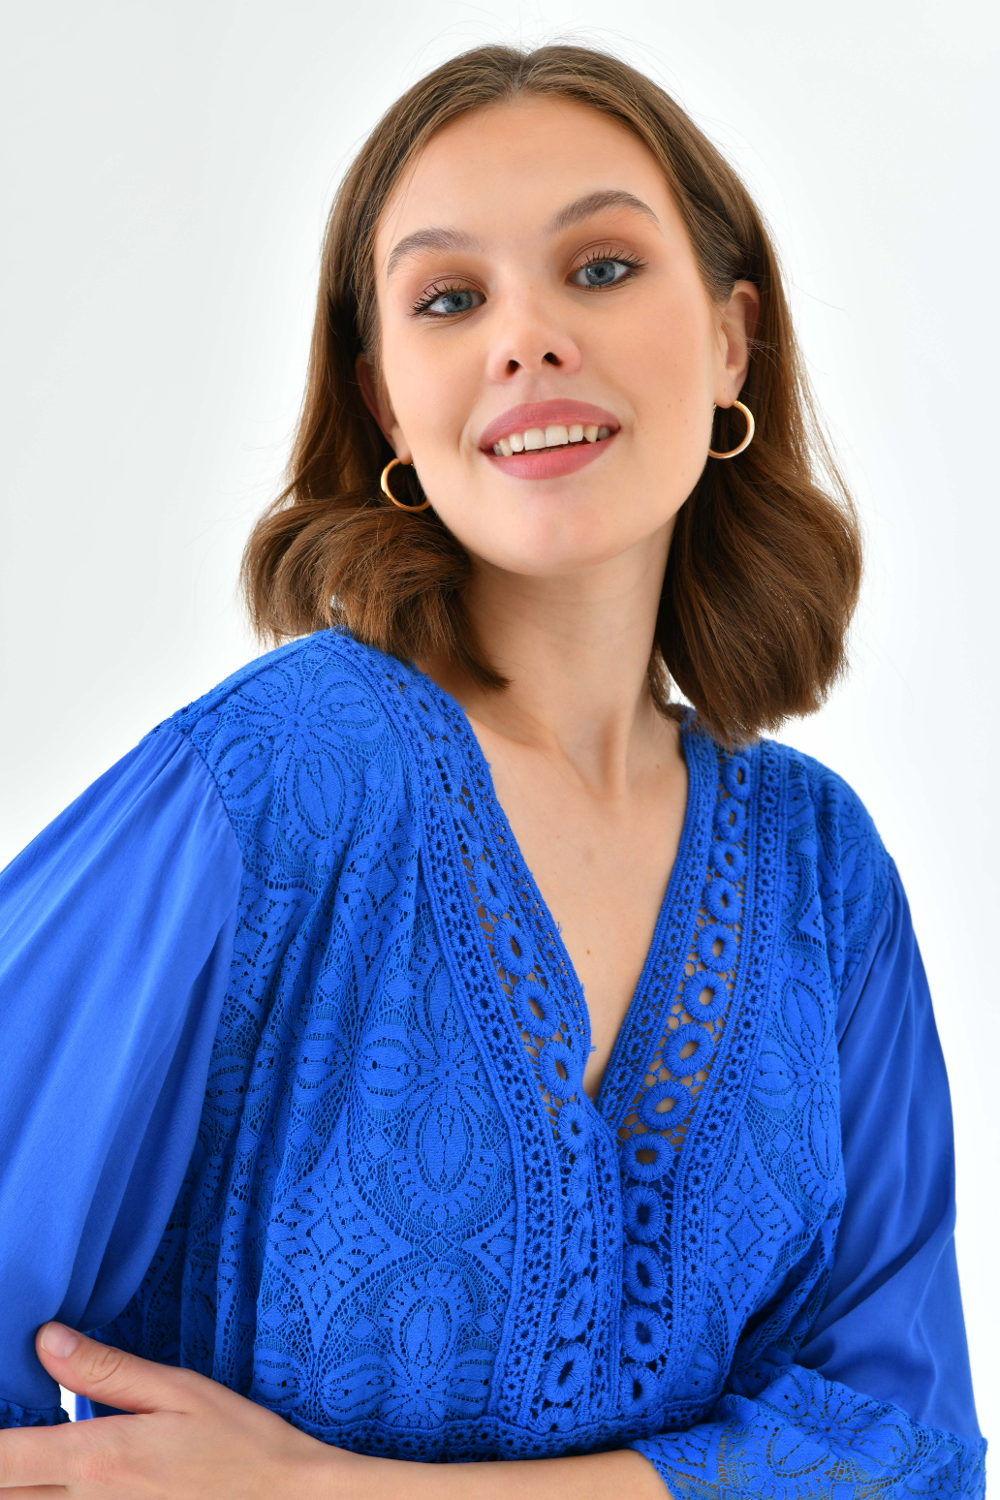 Oversized 3/4 Sleeves Lace Detailed V Neck Mini Dress In Royal Blue 0490DRESSROYALBLUE